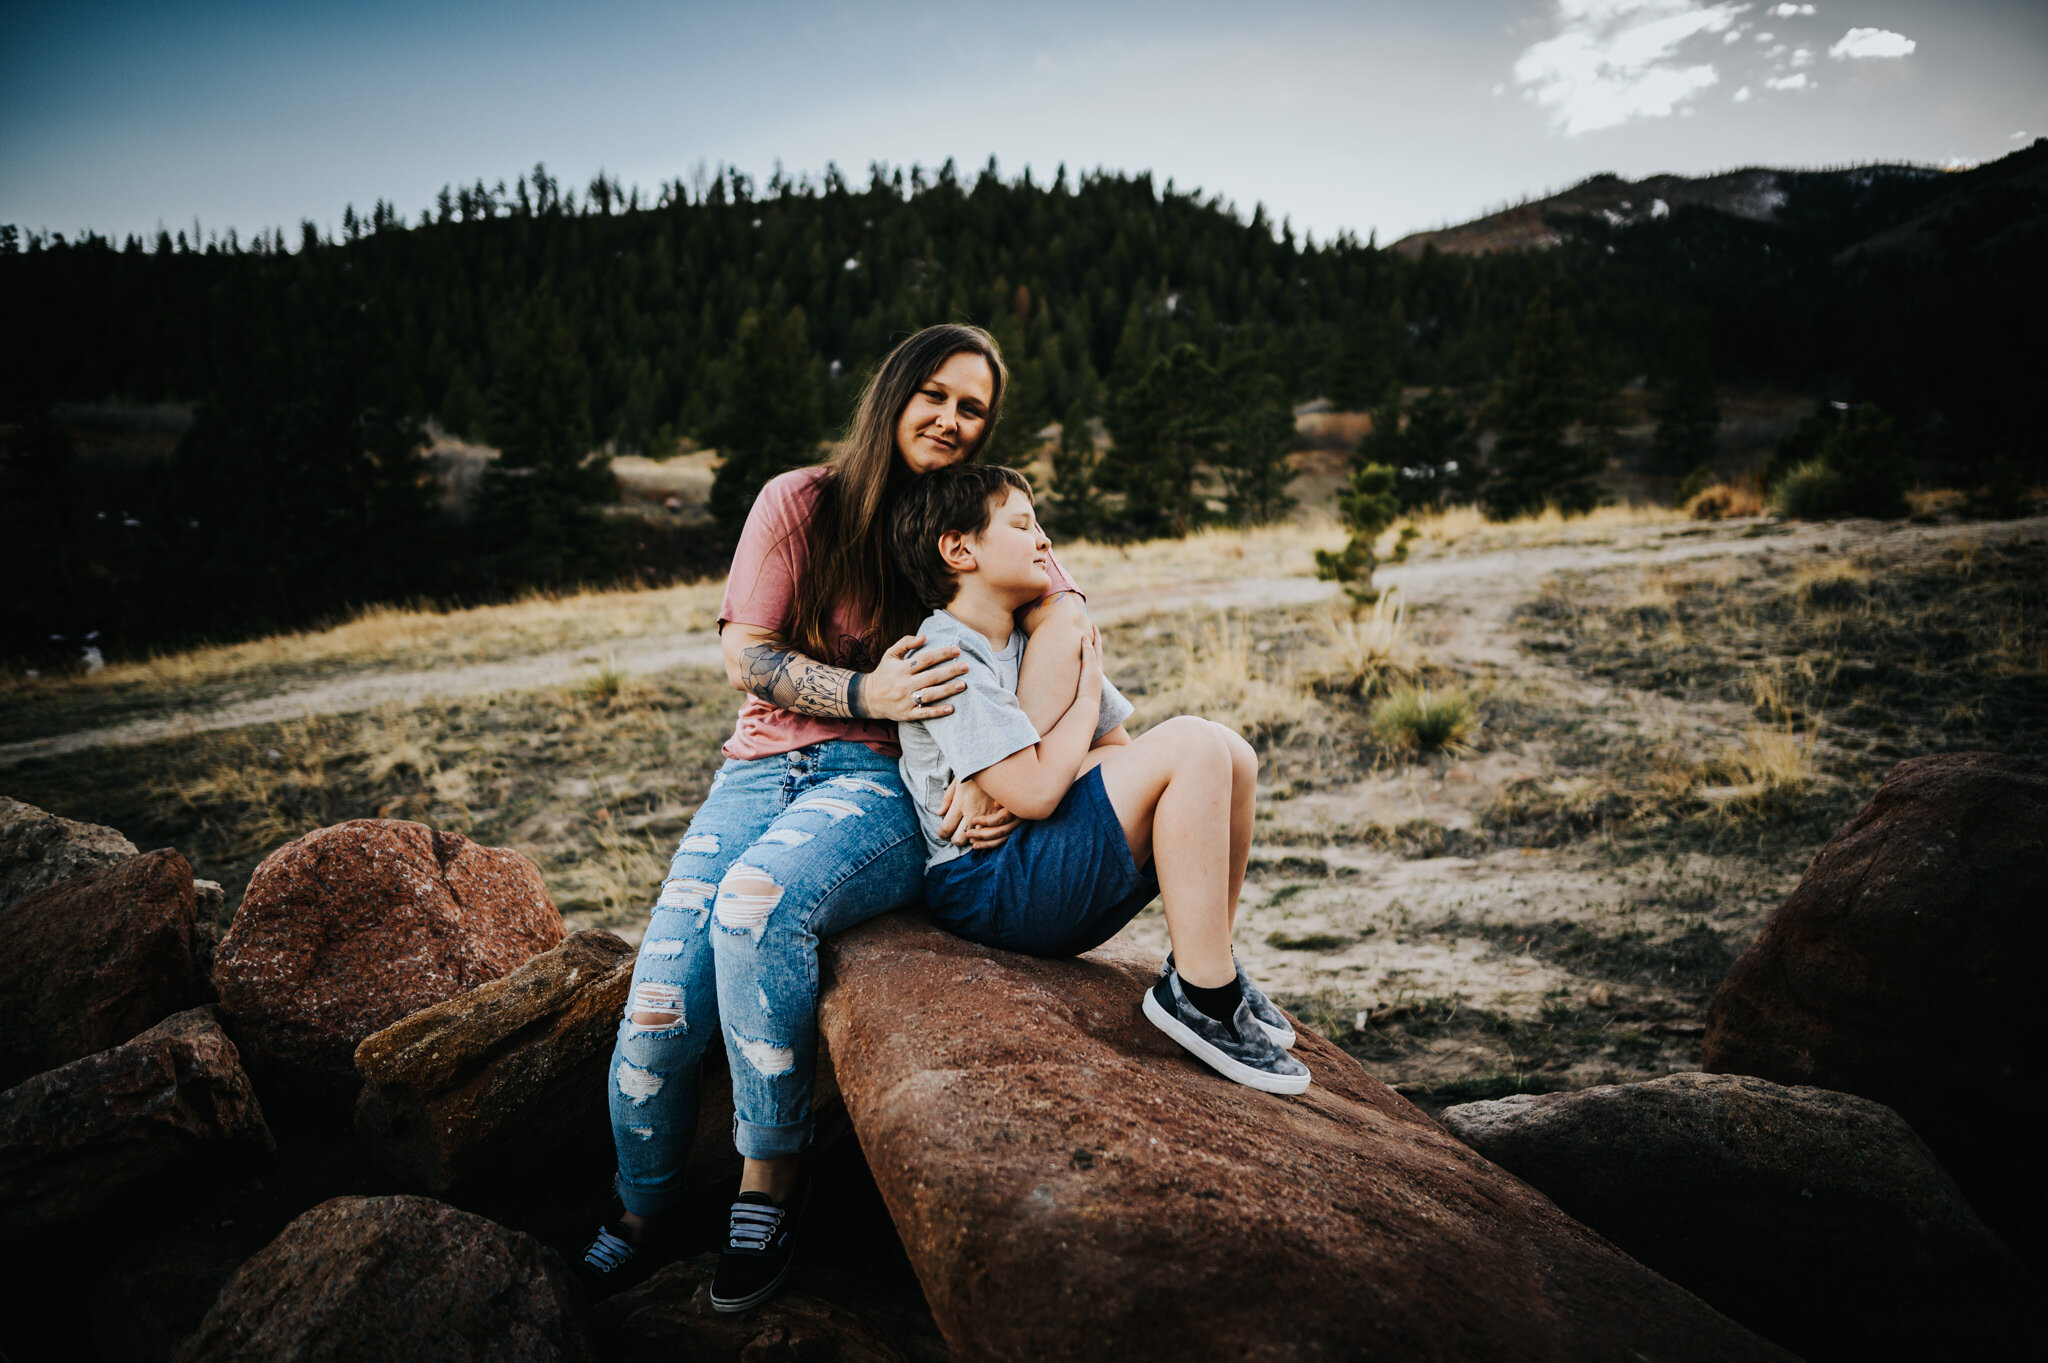 Danielle McVey Family Session Colorado Springs Photographer Sunset Mountains Wild Prairie Photography-32-2020.jpg